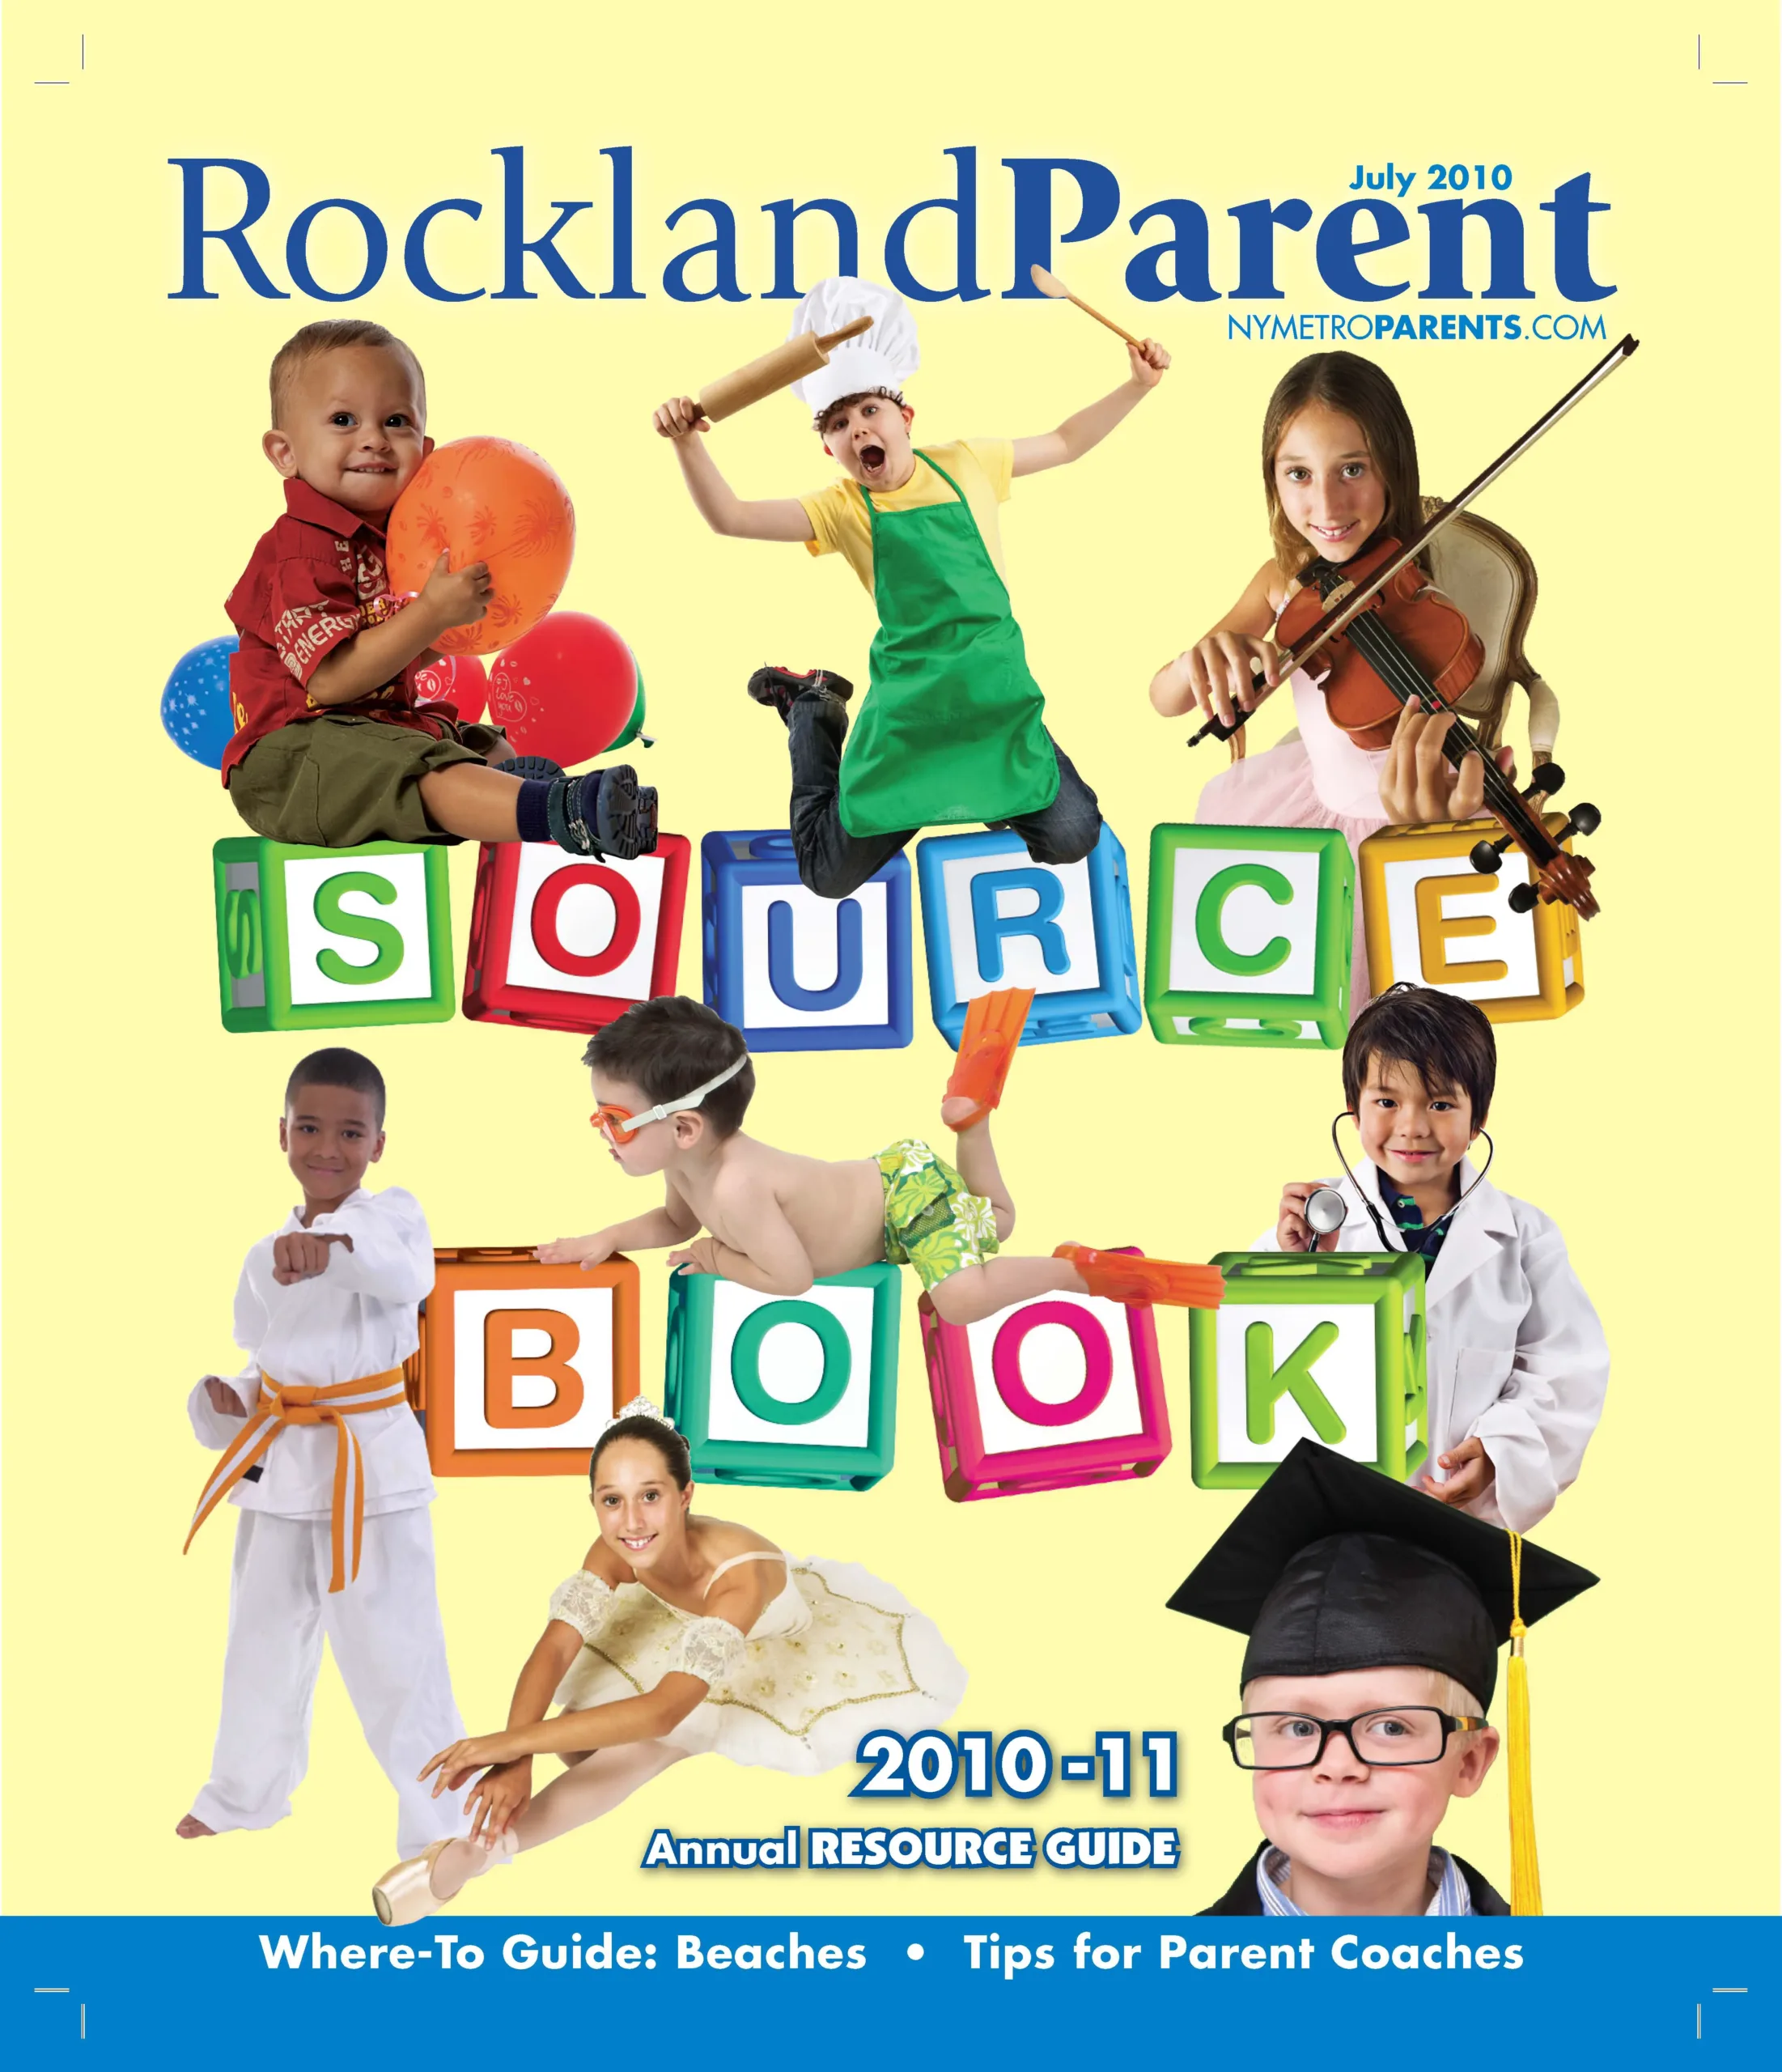 Rockland Parent magazine, Source Book July 2010